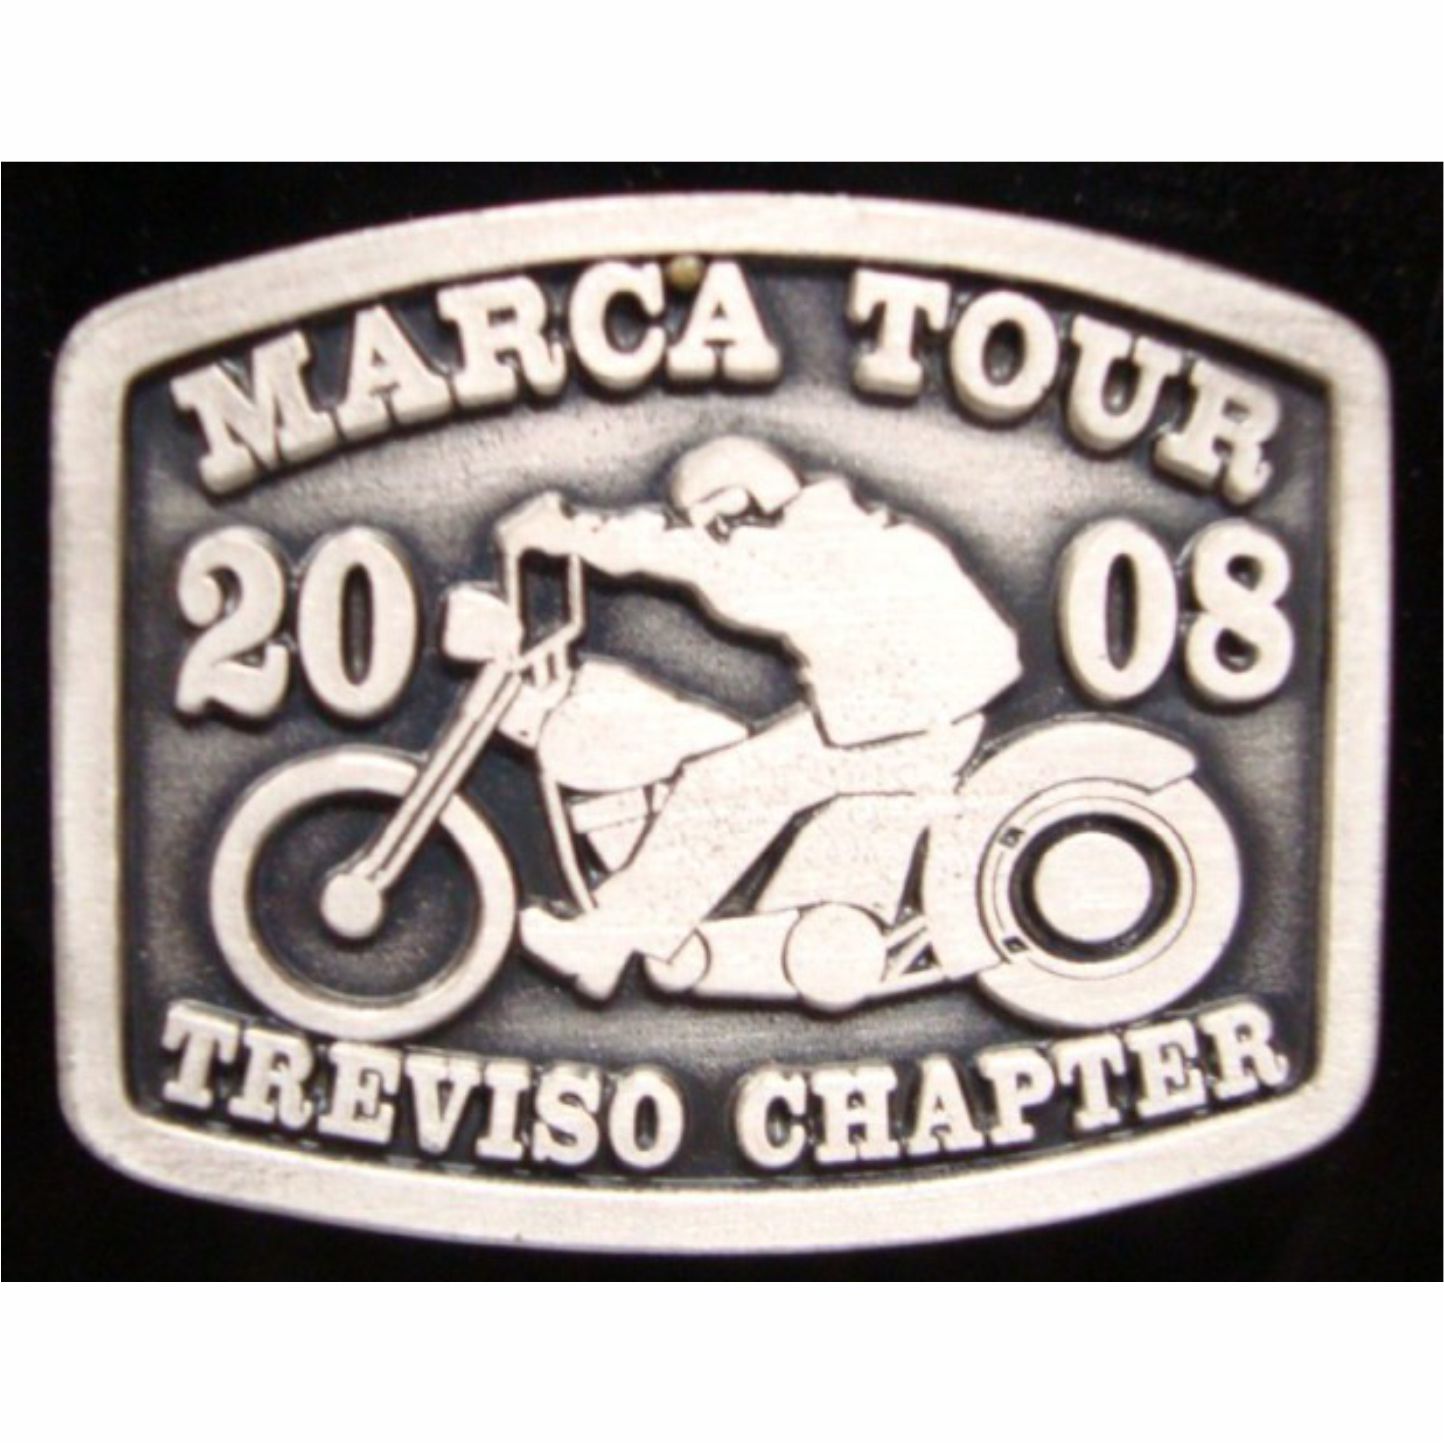 Spilla Marca Tour Treviso Chapter